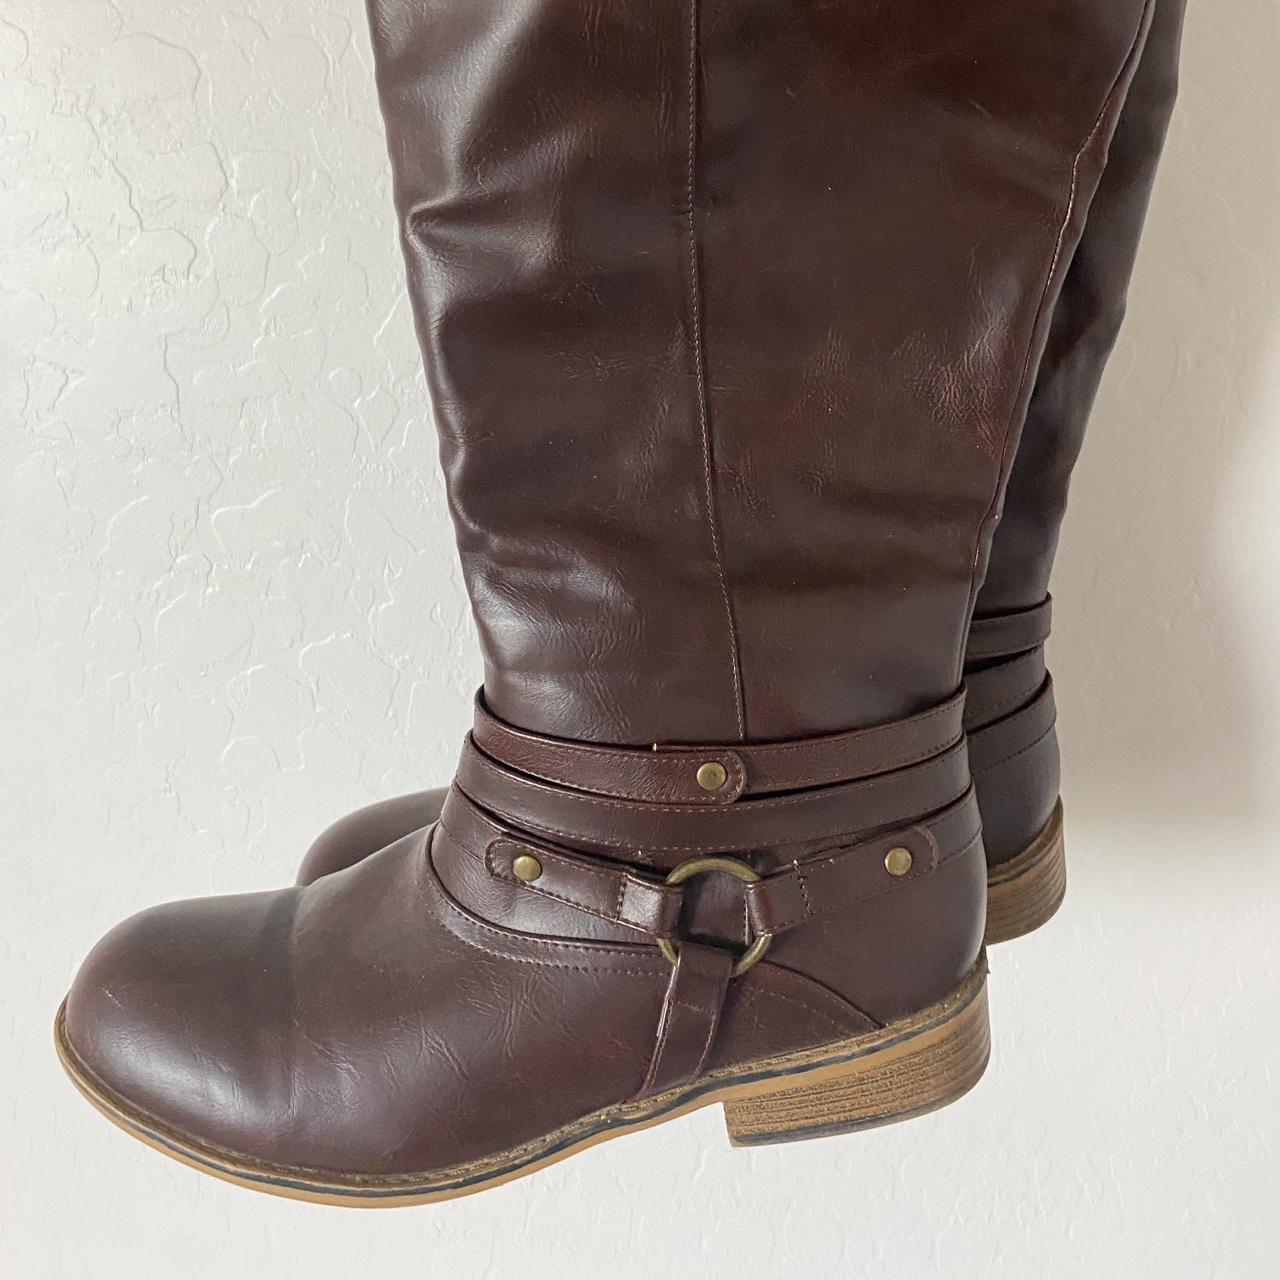 knee high boots -women’s size 10 -reddish-brown color - Depop